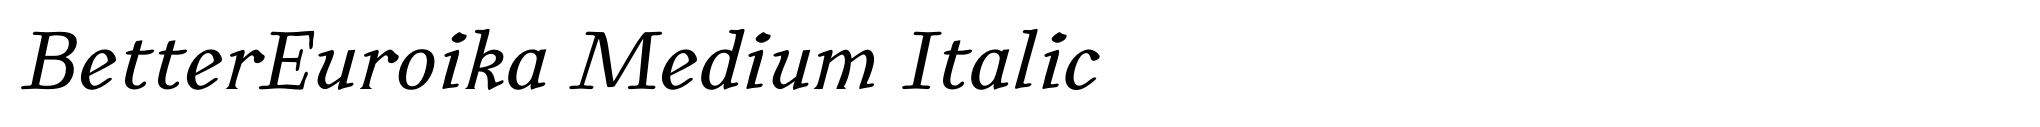 BetterEuroika Medium Italic image